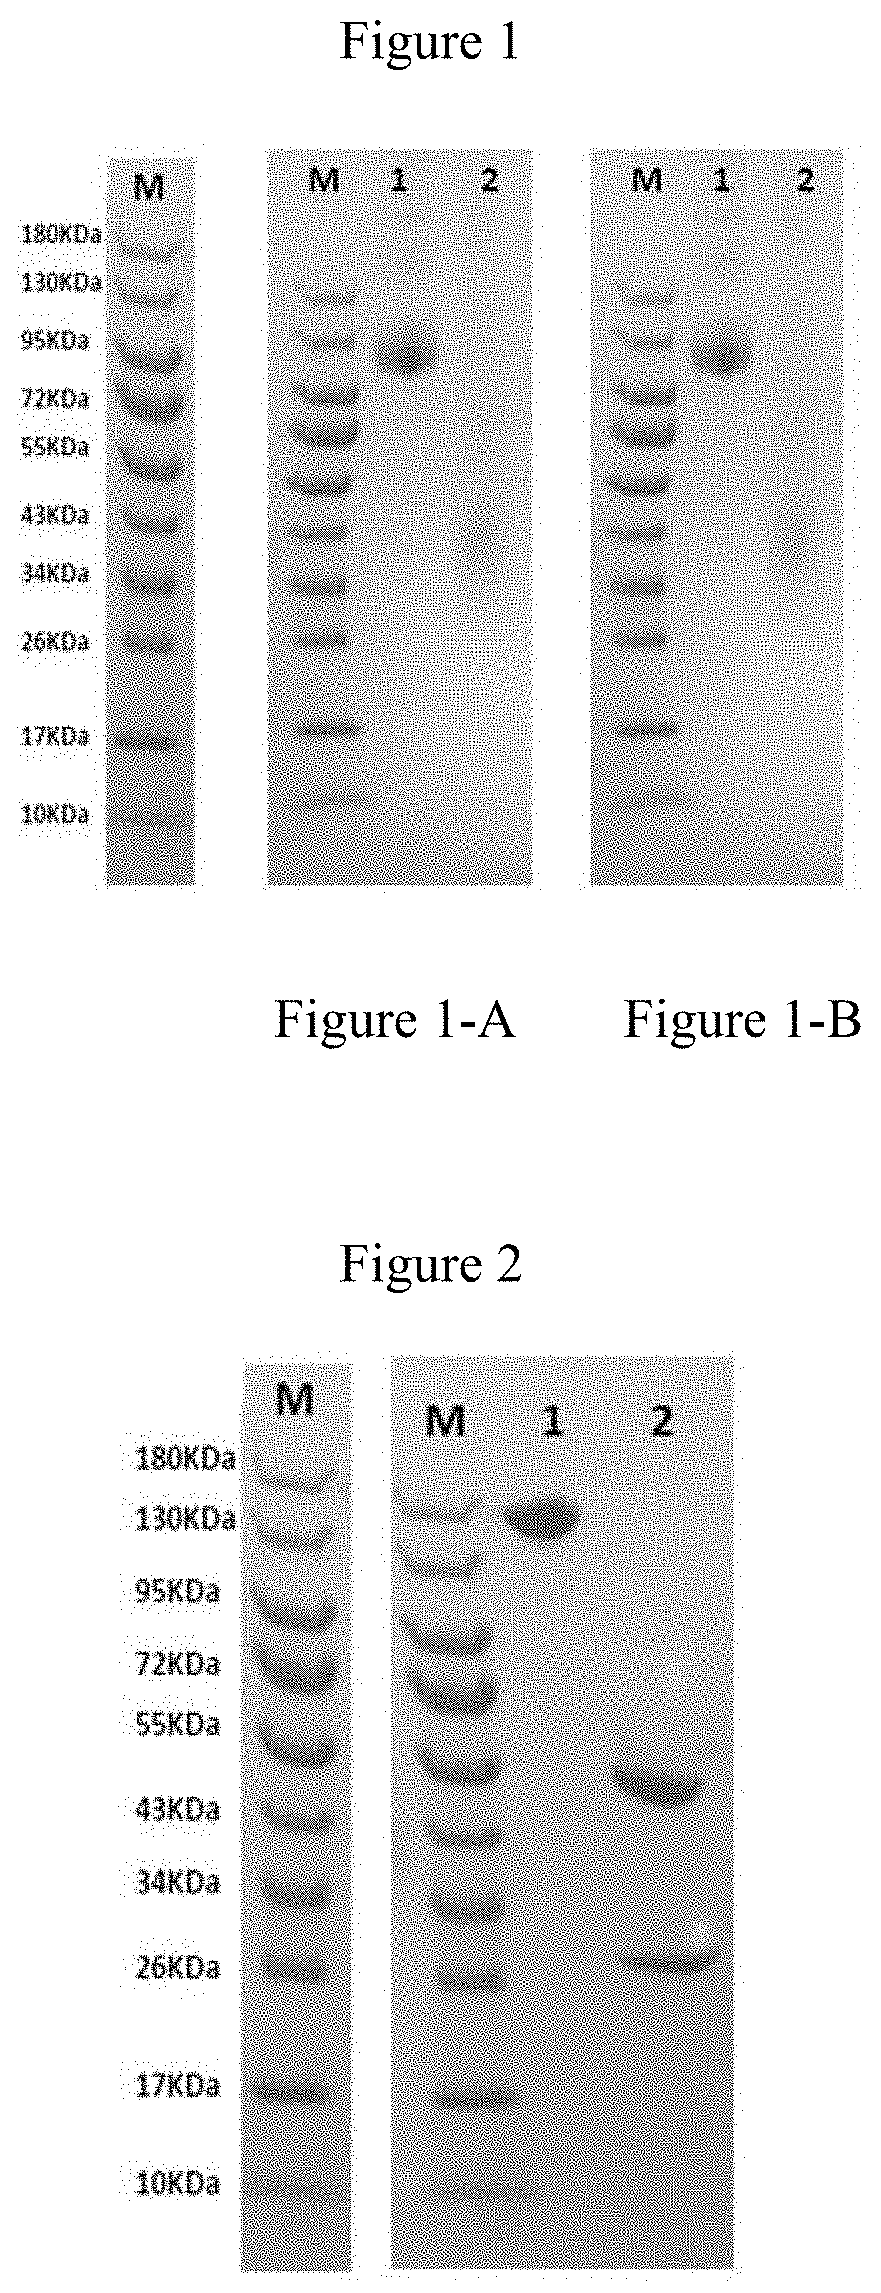 Anti-CD47 monoclonal antibody and use thereof